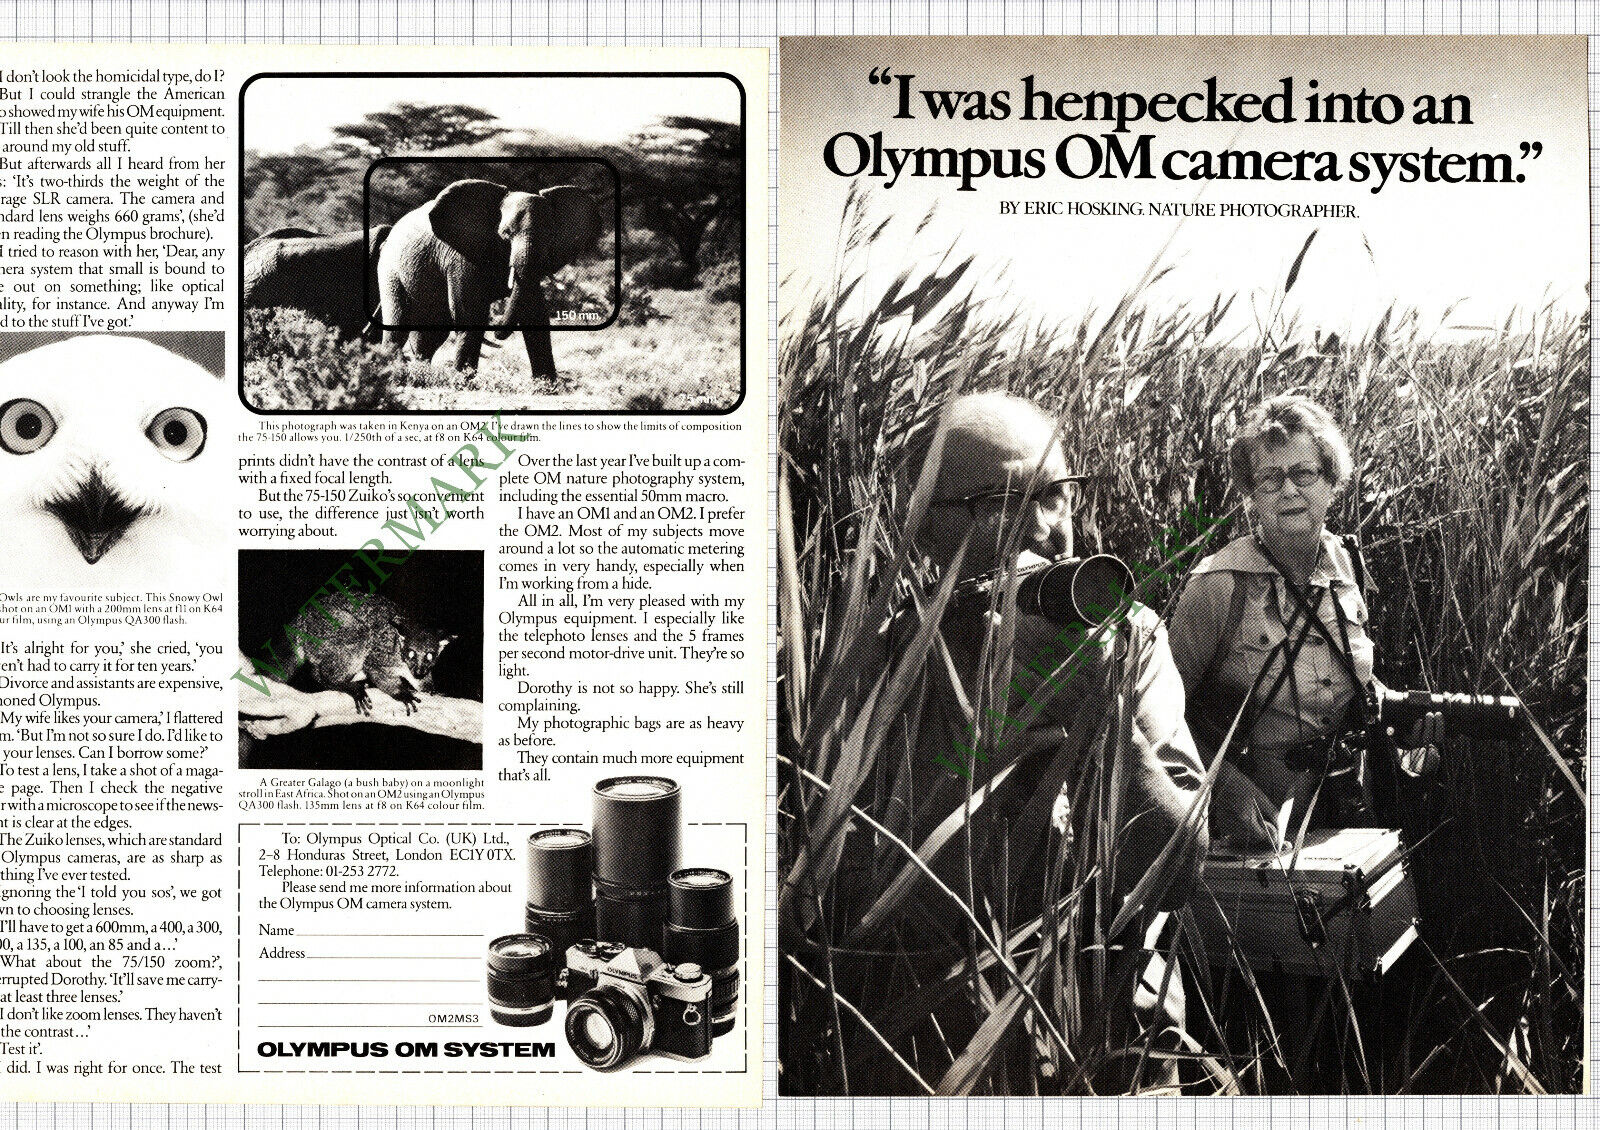 9016) Eric Hosking Nature Photographer Olympus Advert - 1976 2-Part Cutting